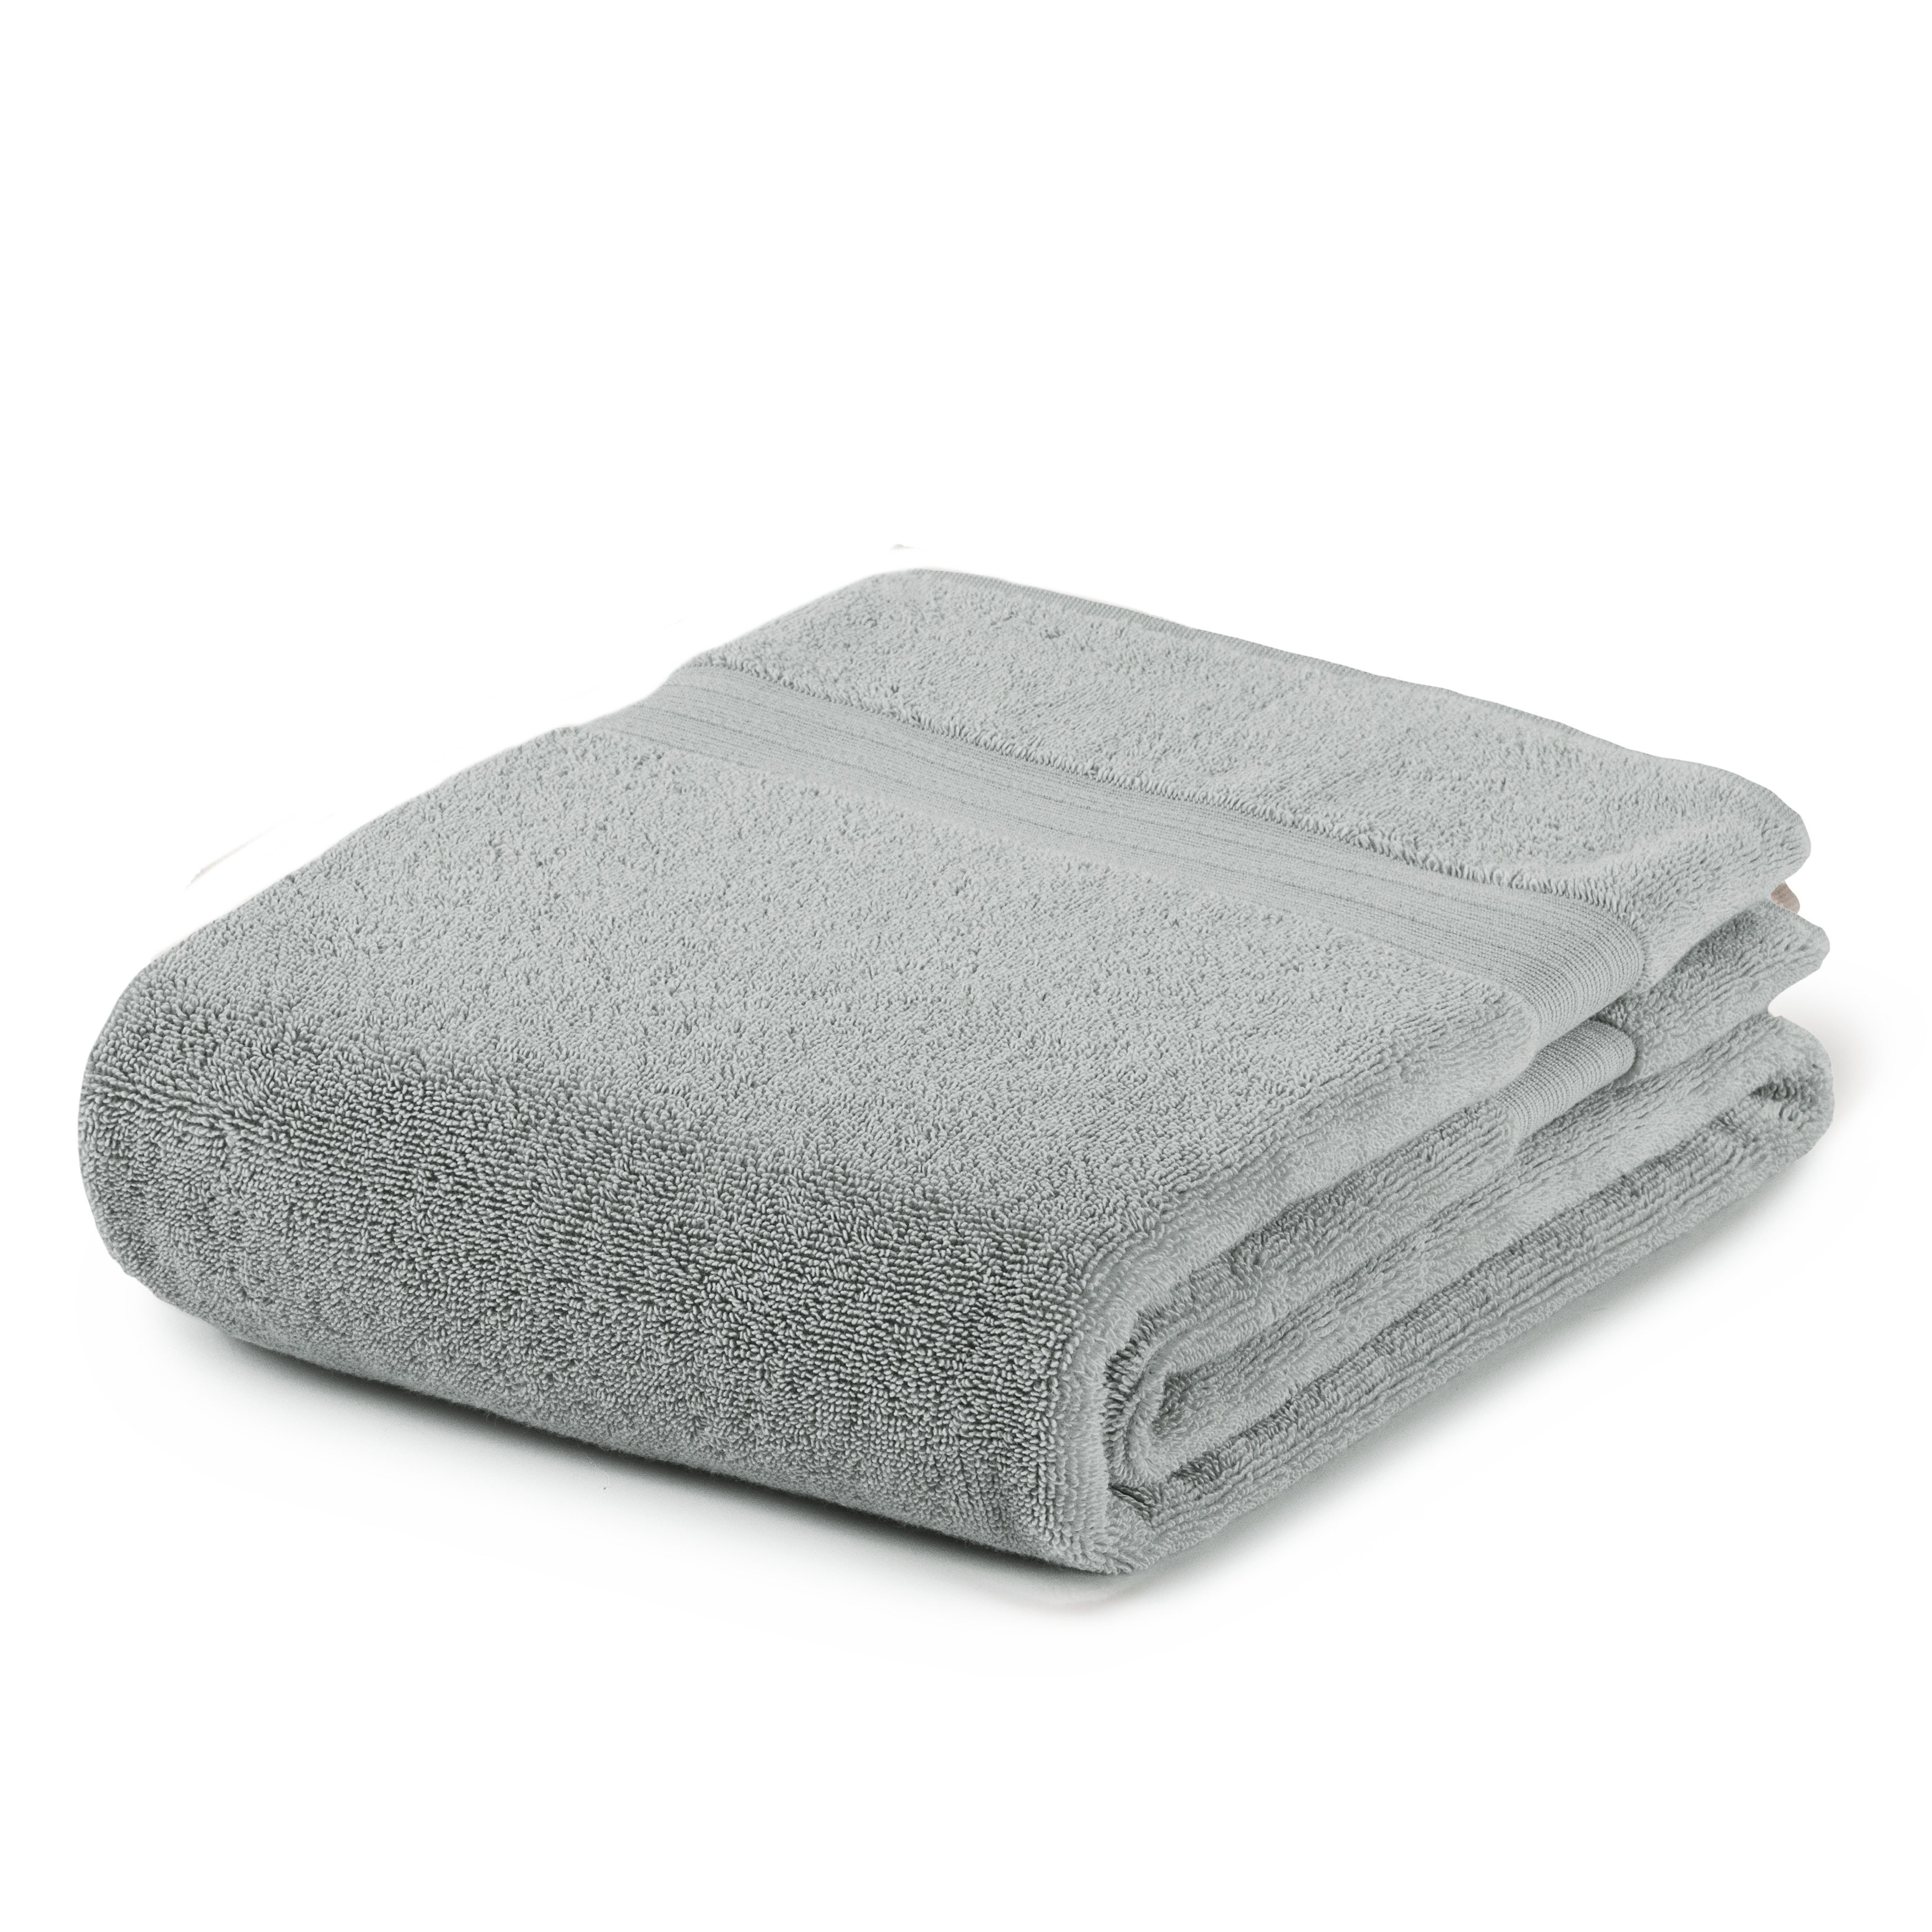 The Plush Towel - Mist